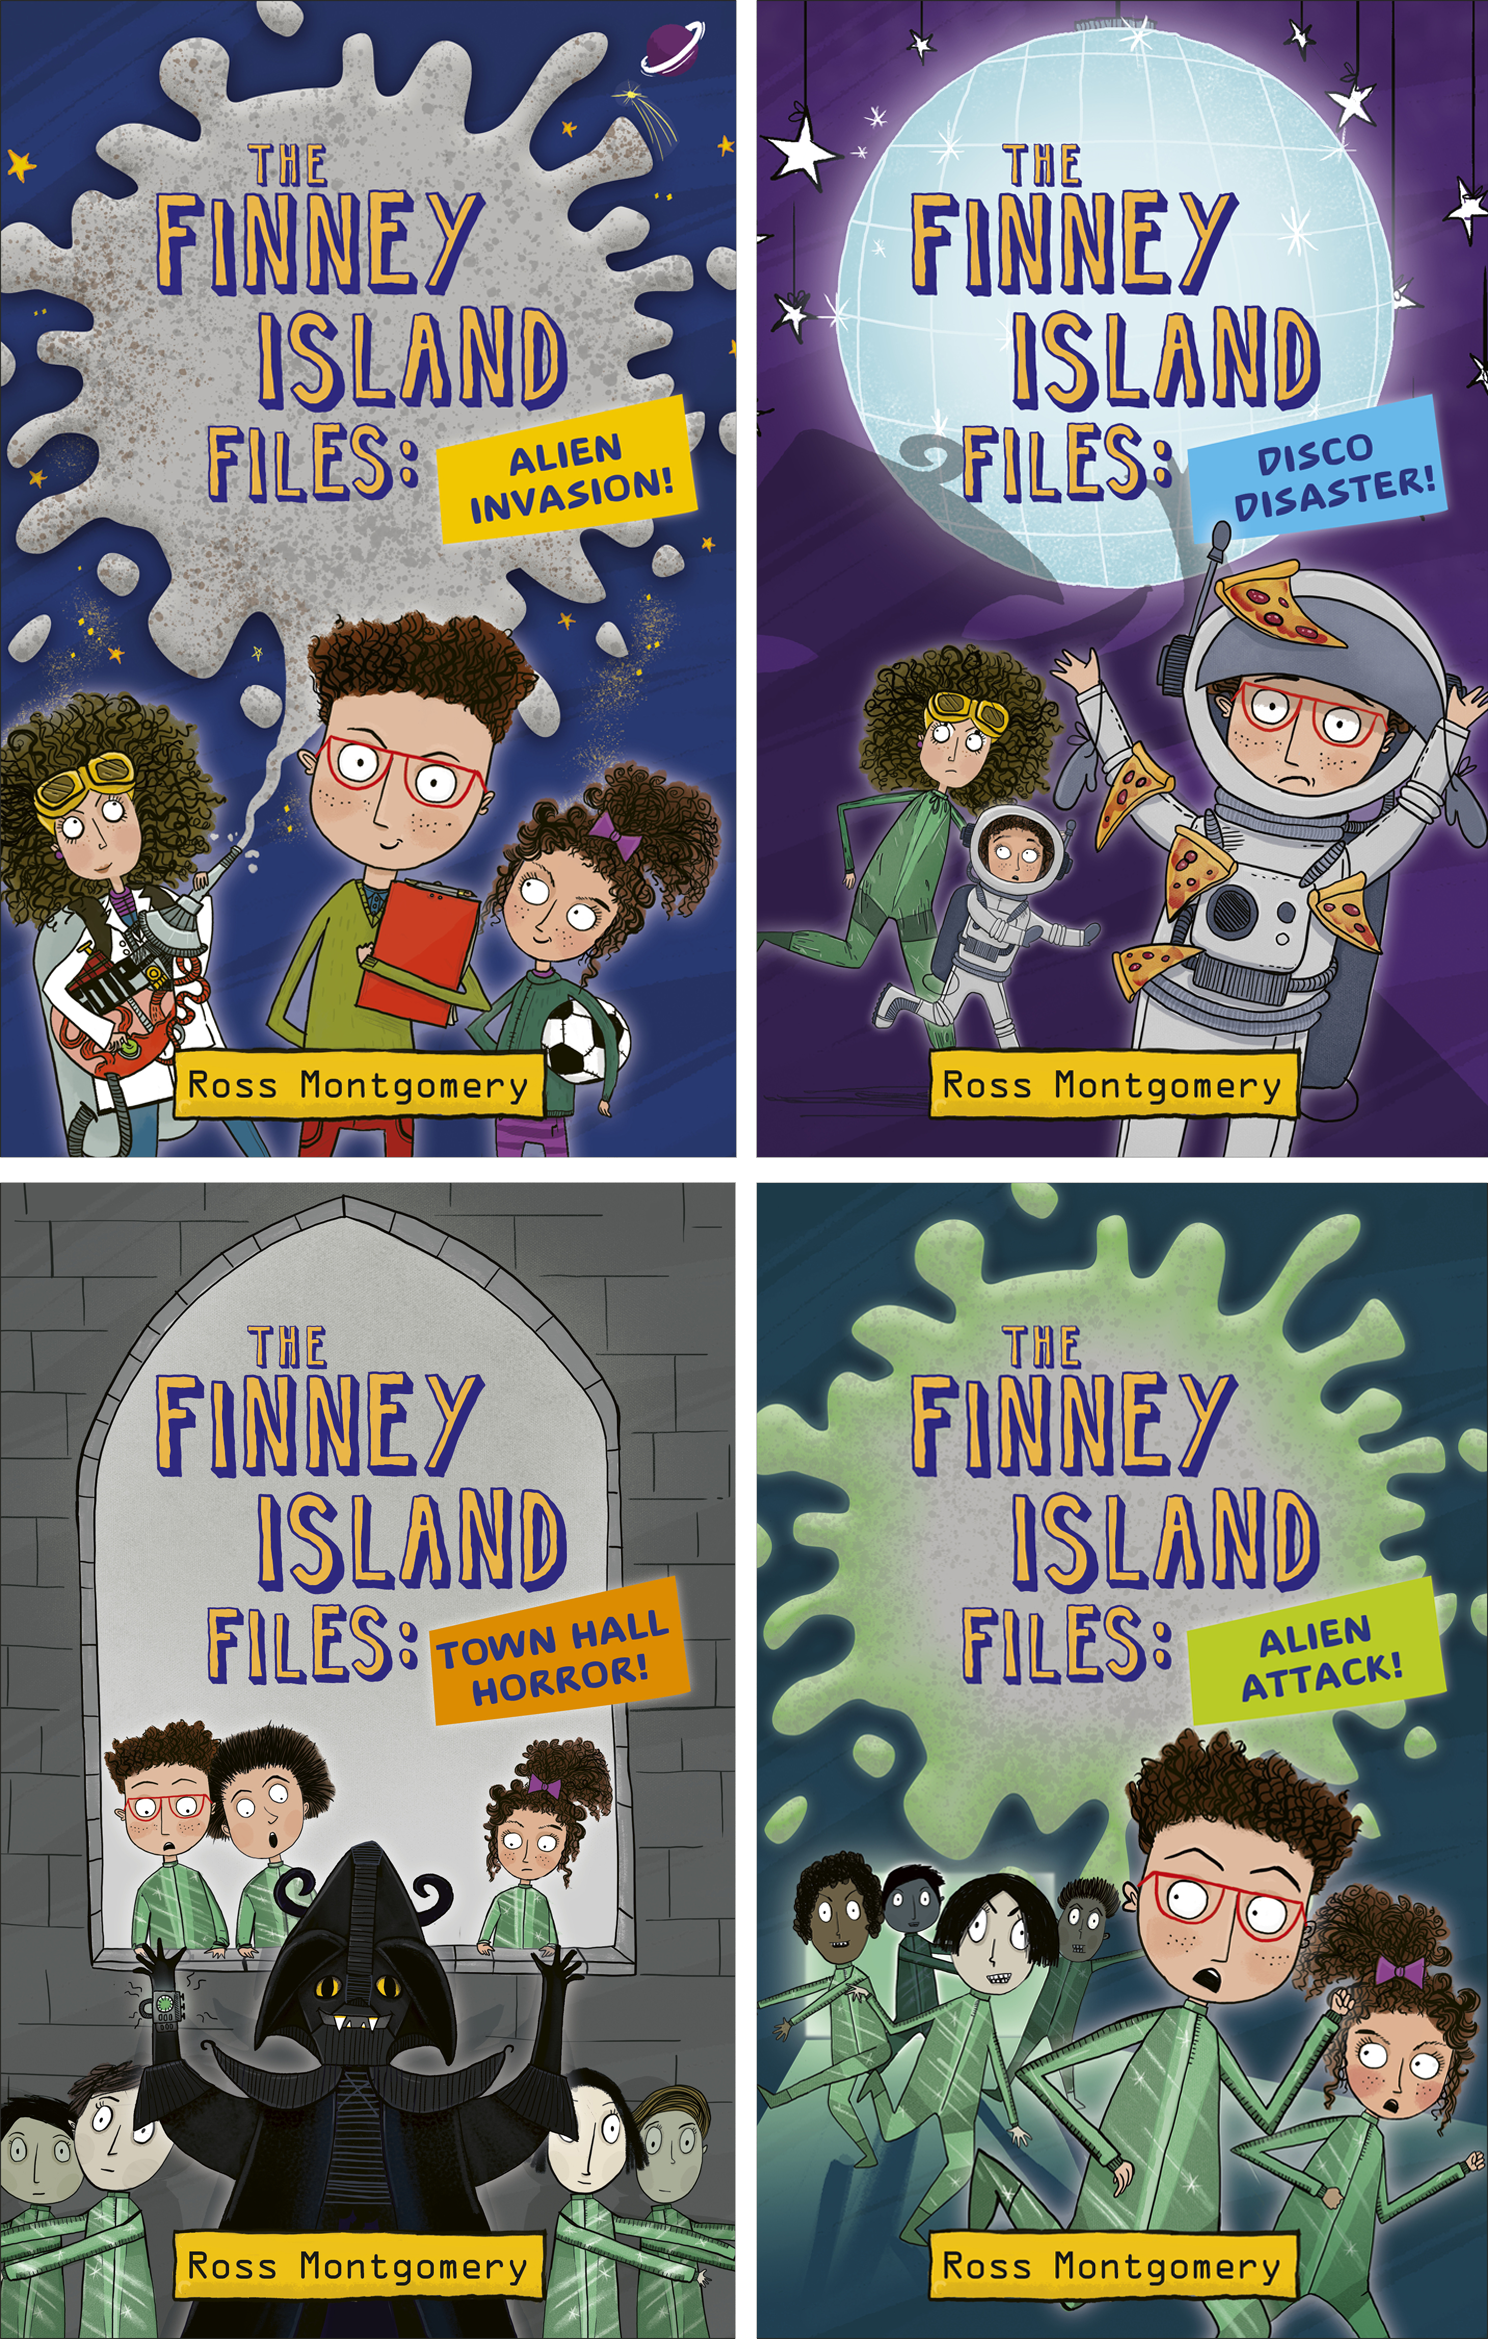 The Finney Island Files